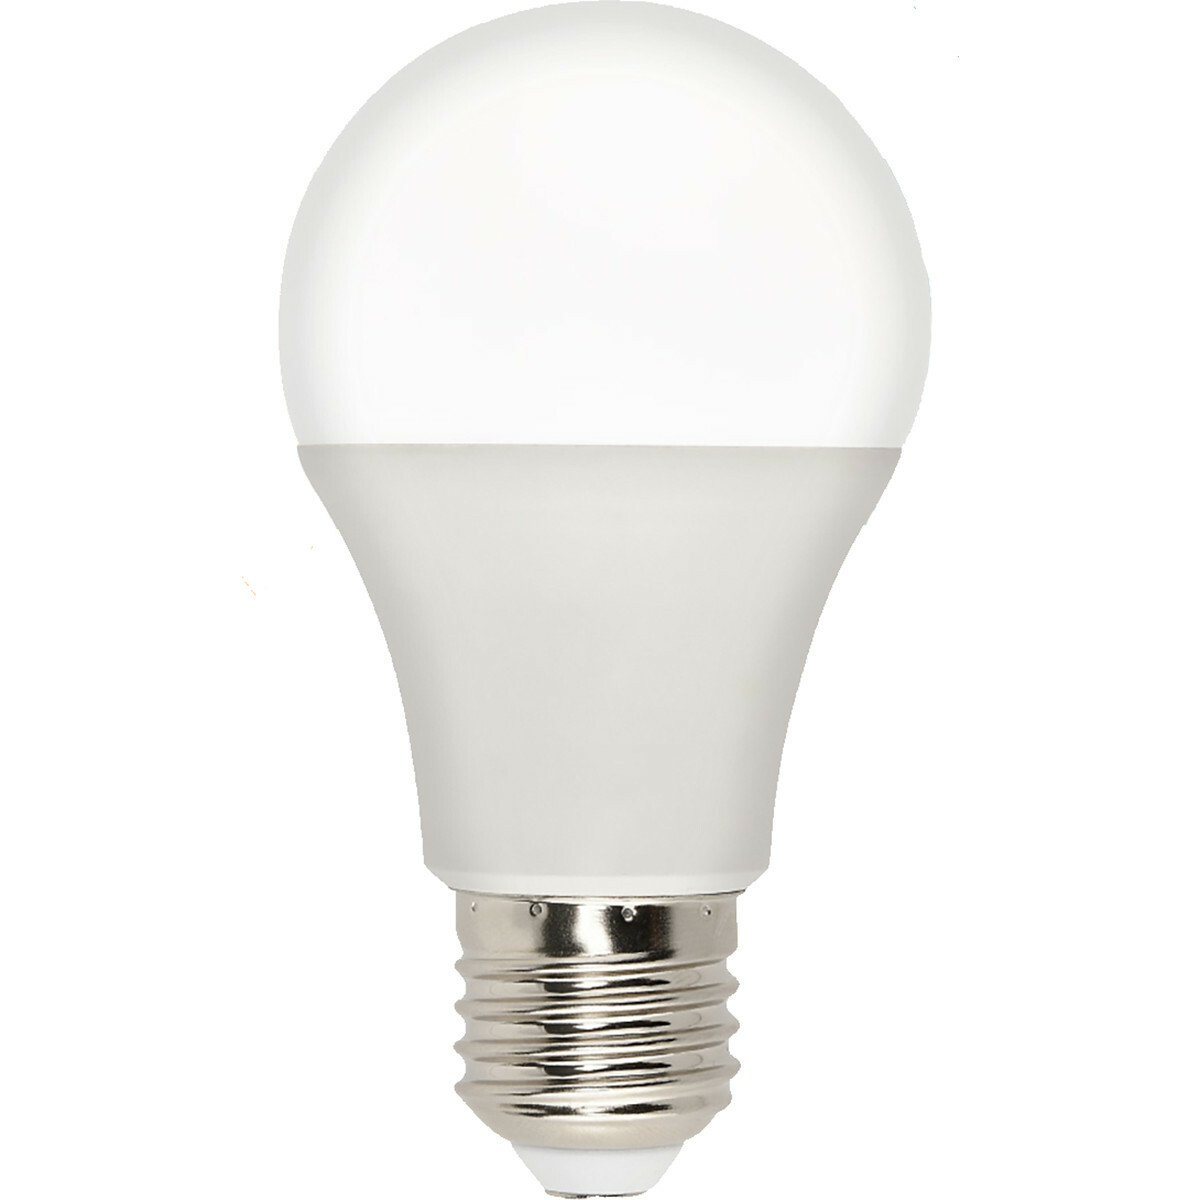 LED Lamp Kozolux Runi E27 Fitting 12W Helder-Koud Wit 6400K